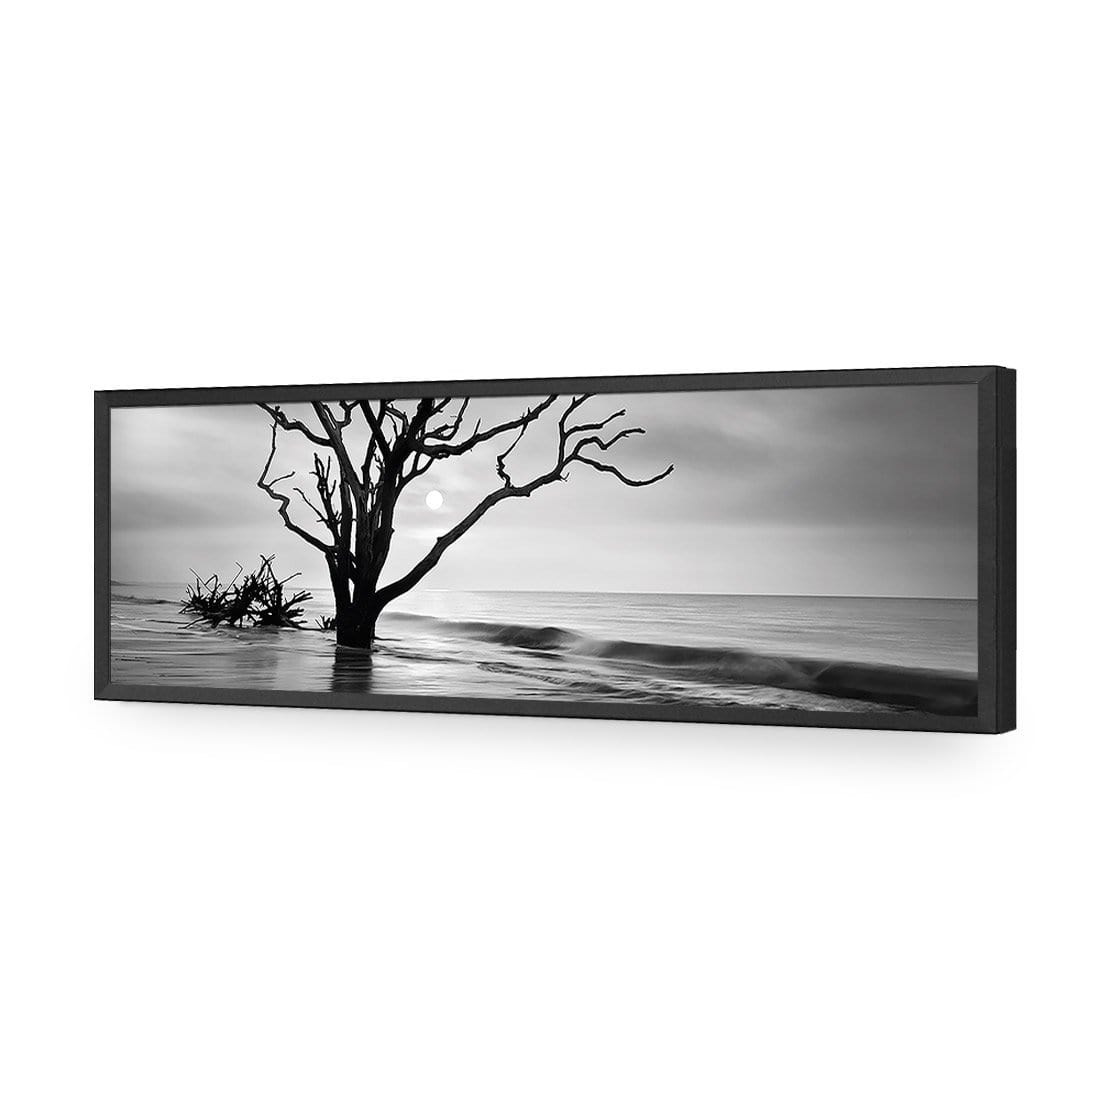 Botany Bay Sunrise, Black and White (Long) - wallart-australia - Acrylic Glass No Border